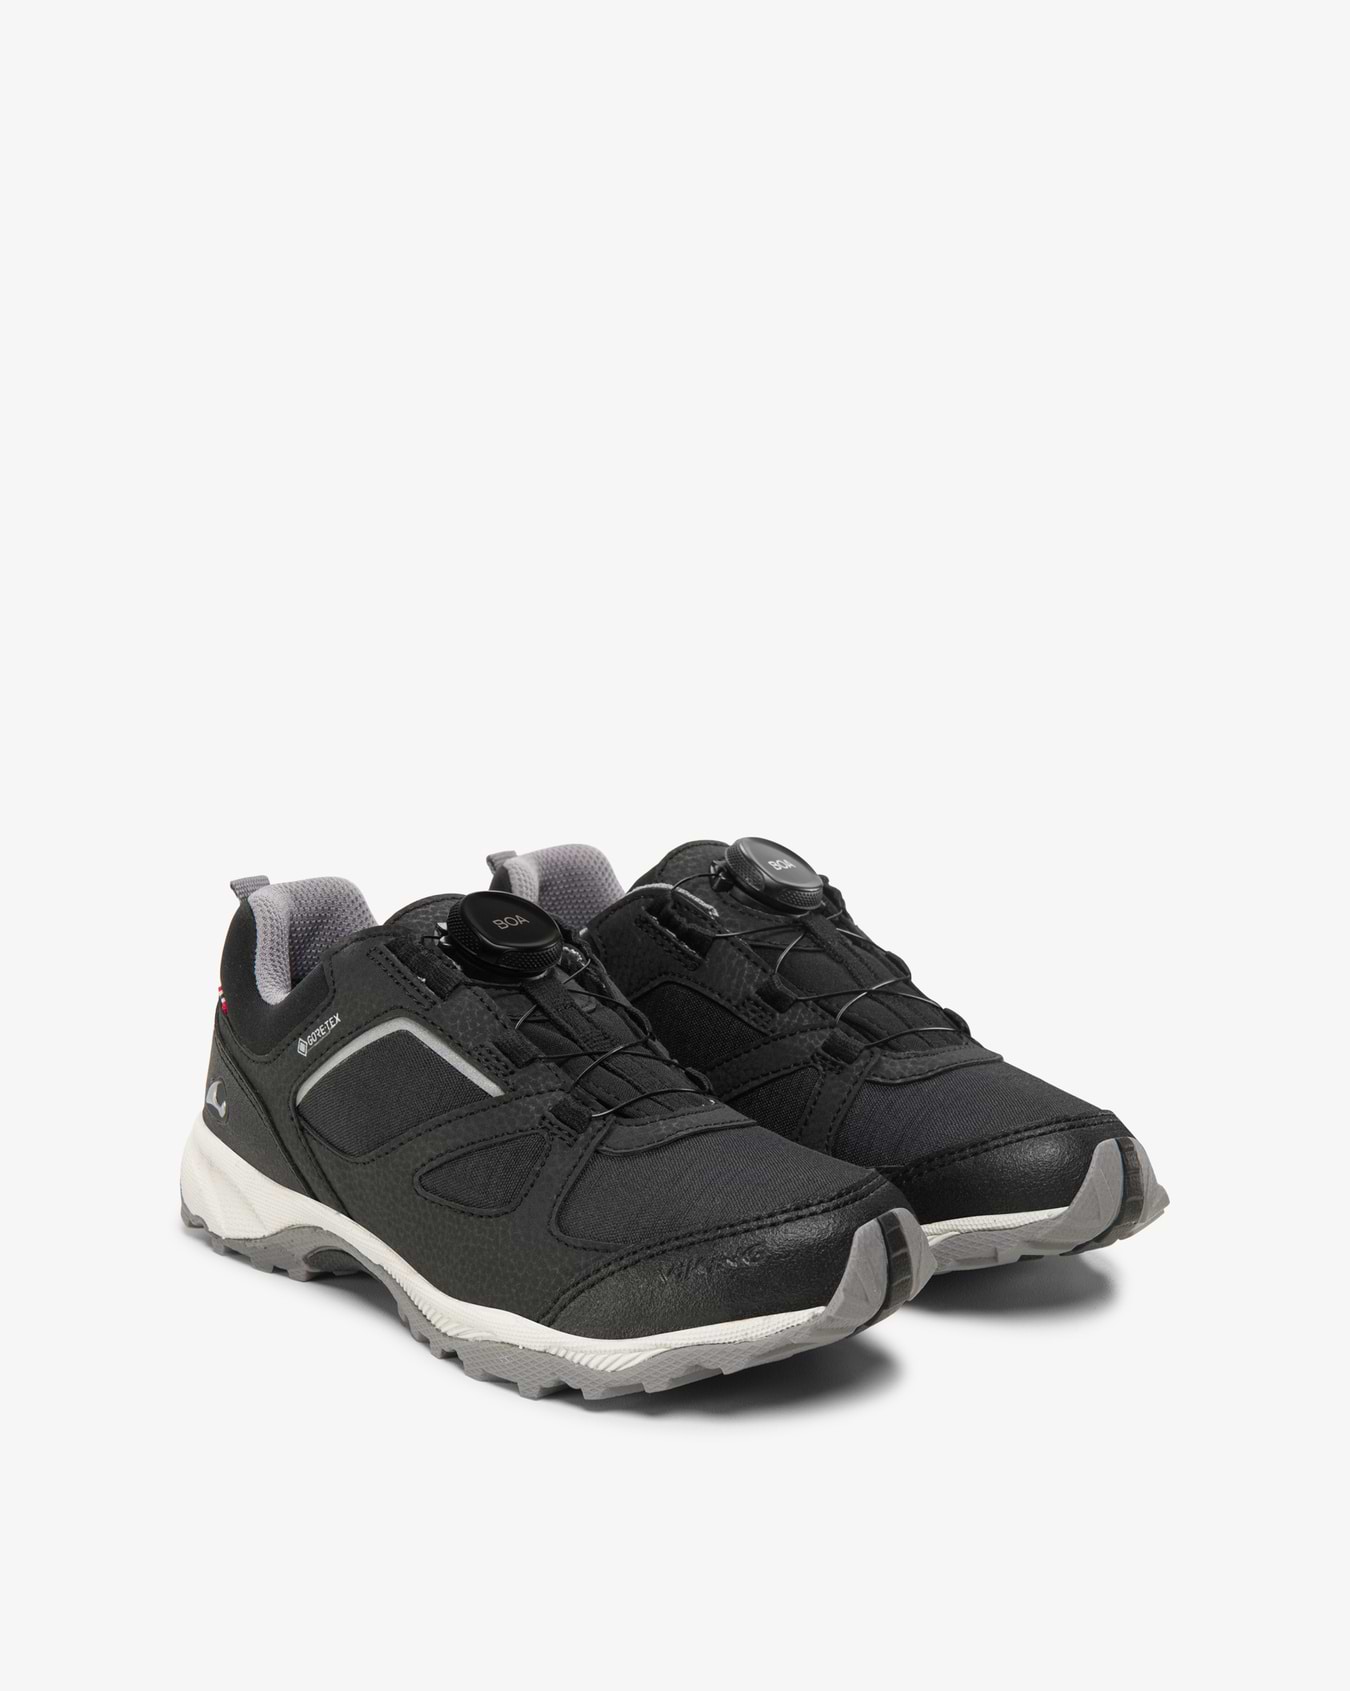 Nator Low GTX BOA Black/Granite Hiking shoe